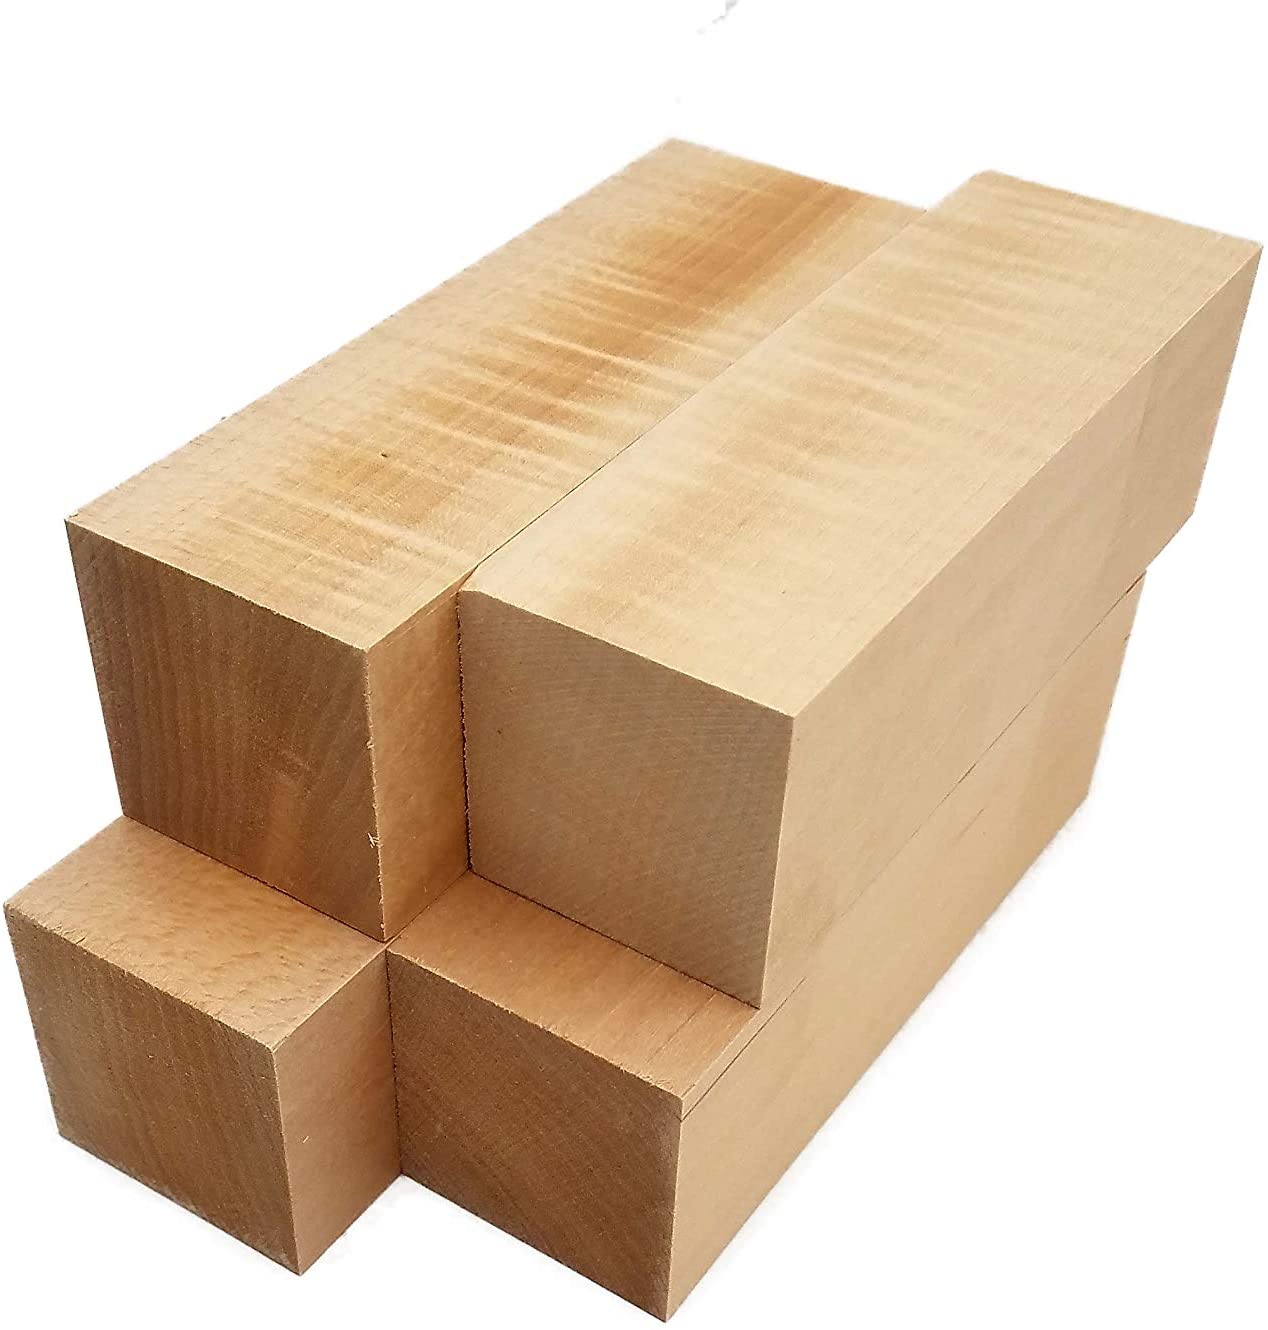 4 PCS Basswood Carving Blocks 4 X 4 X 2 inch Bass Wood for Wood Carving  Whittling Wood Carving Blocks Wood Blocks for Carving Unfinished Wood  Blocks